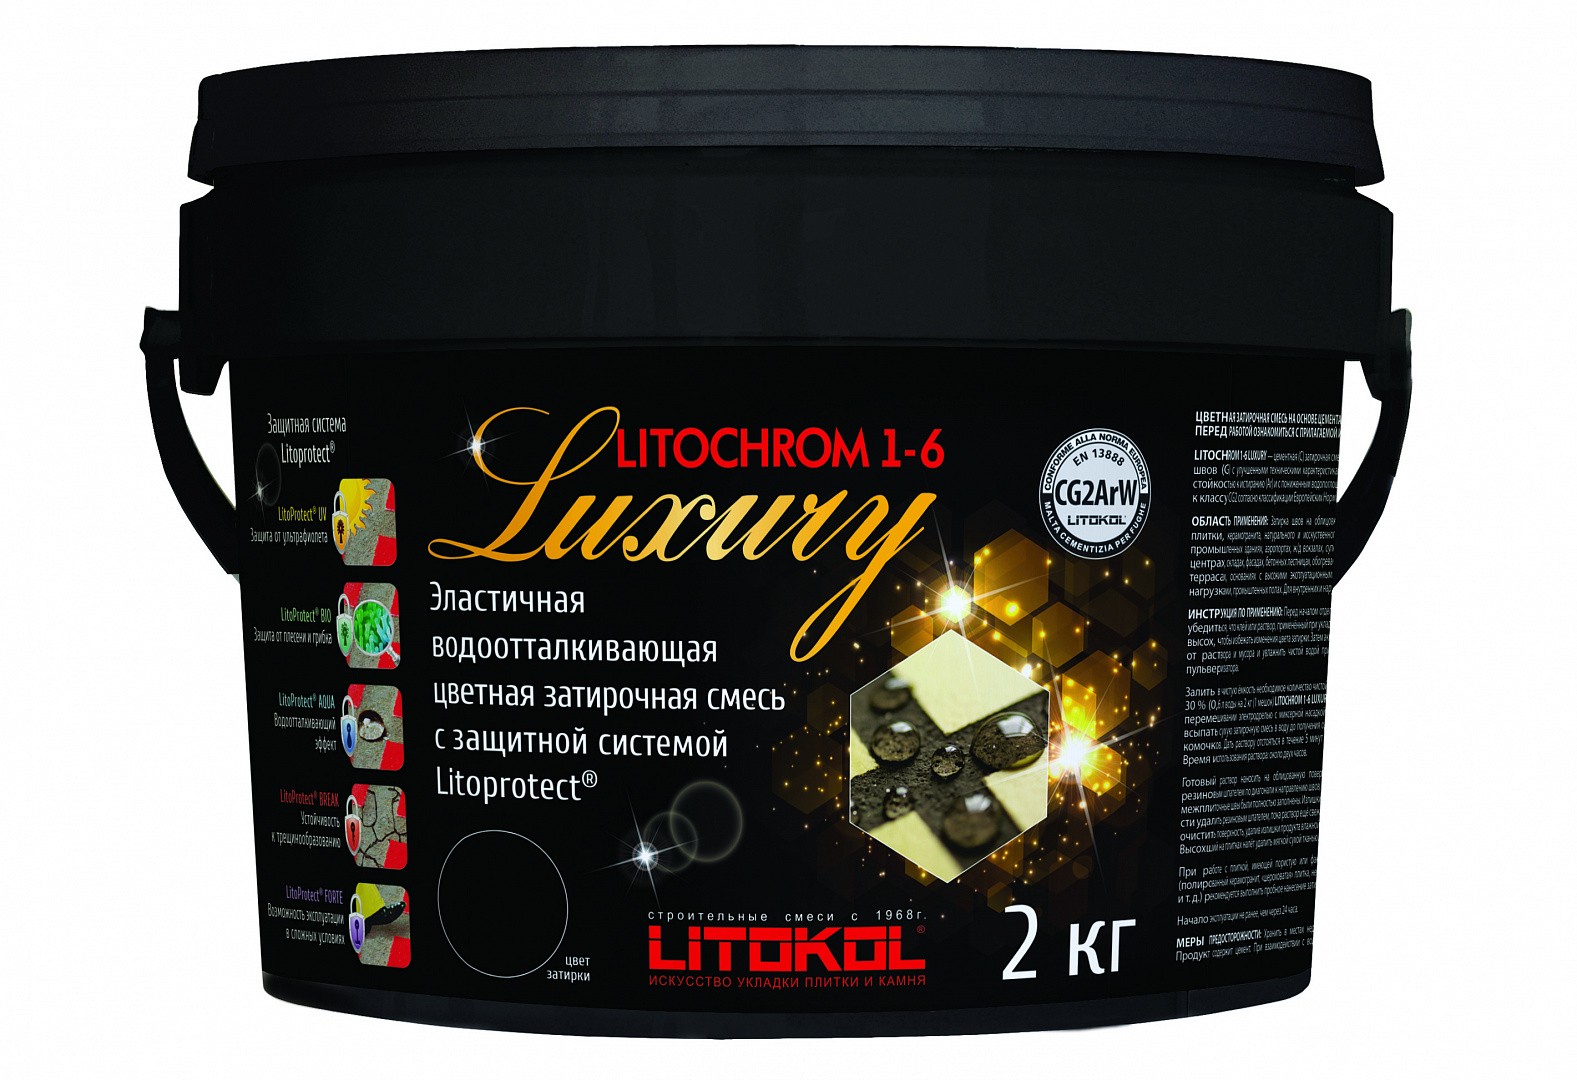 Цементная затирочная смесь LITOCHROM 1-6 LUXURY C.670